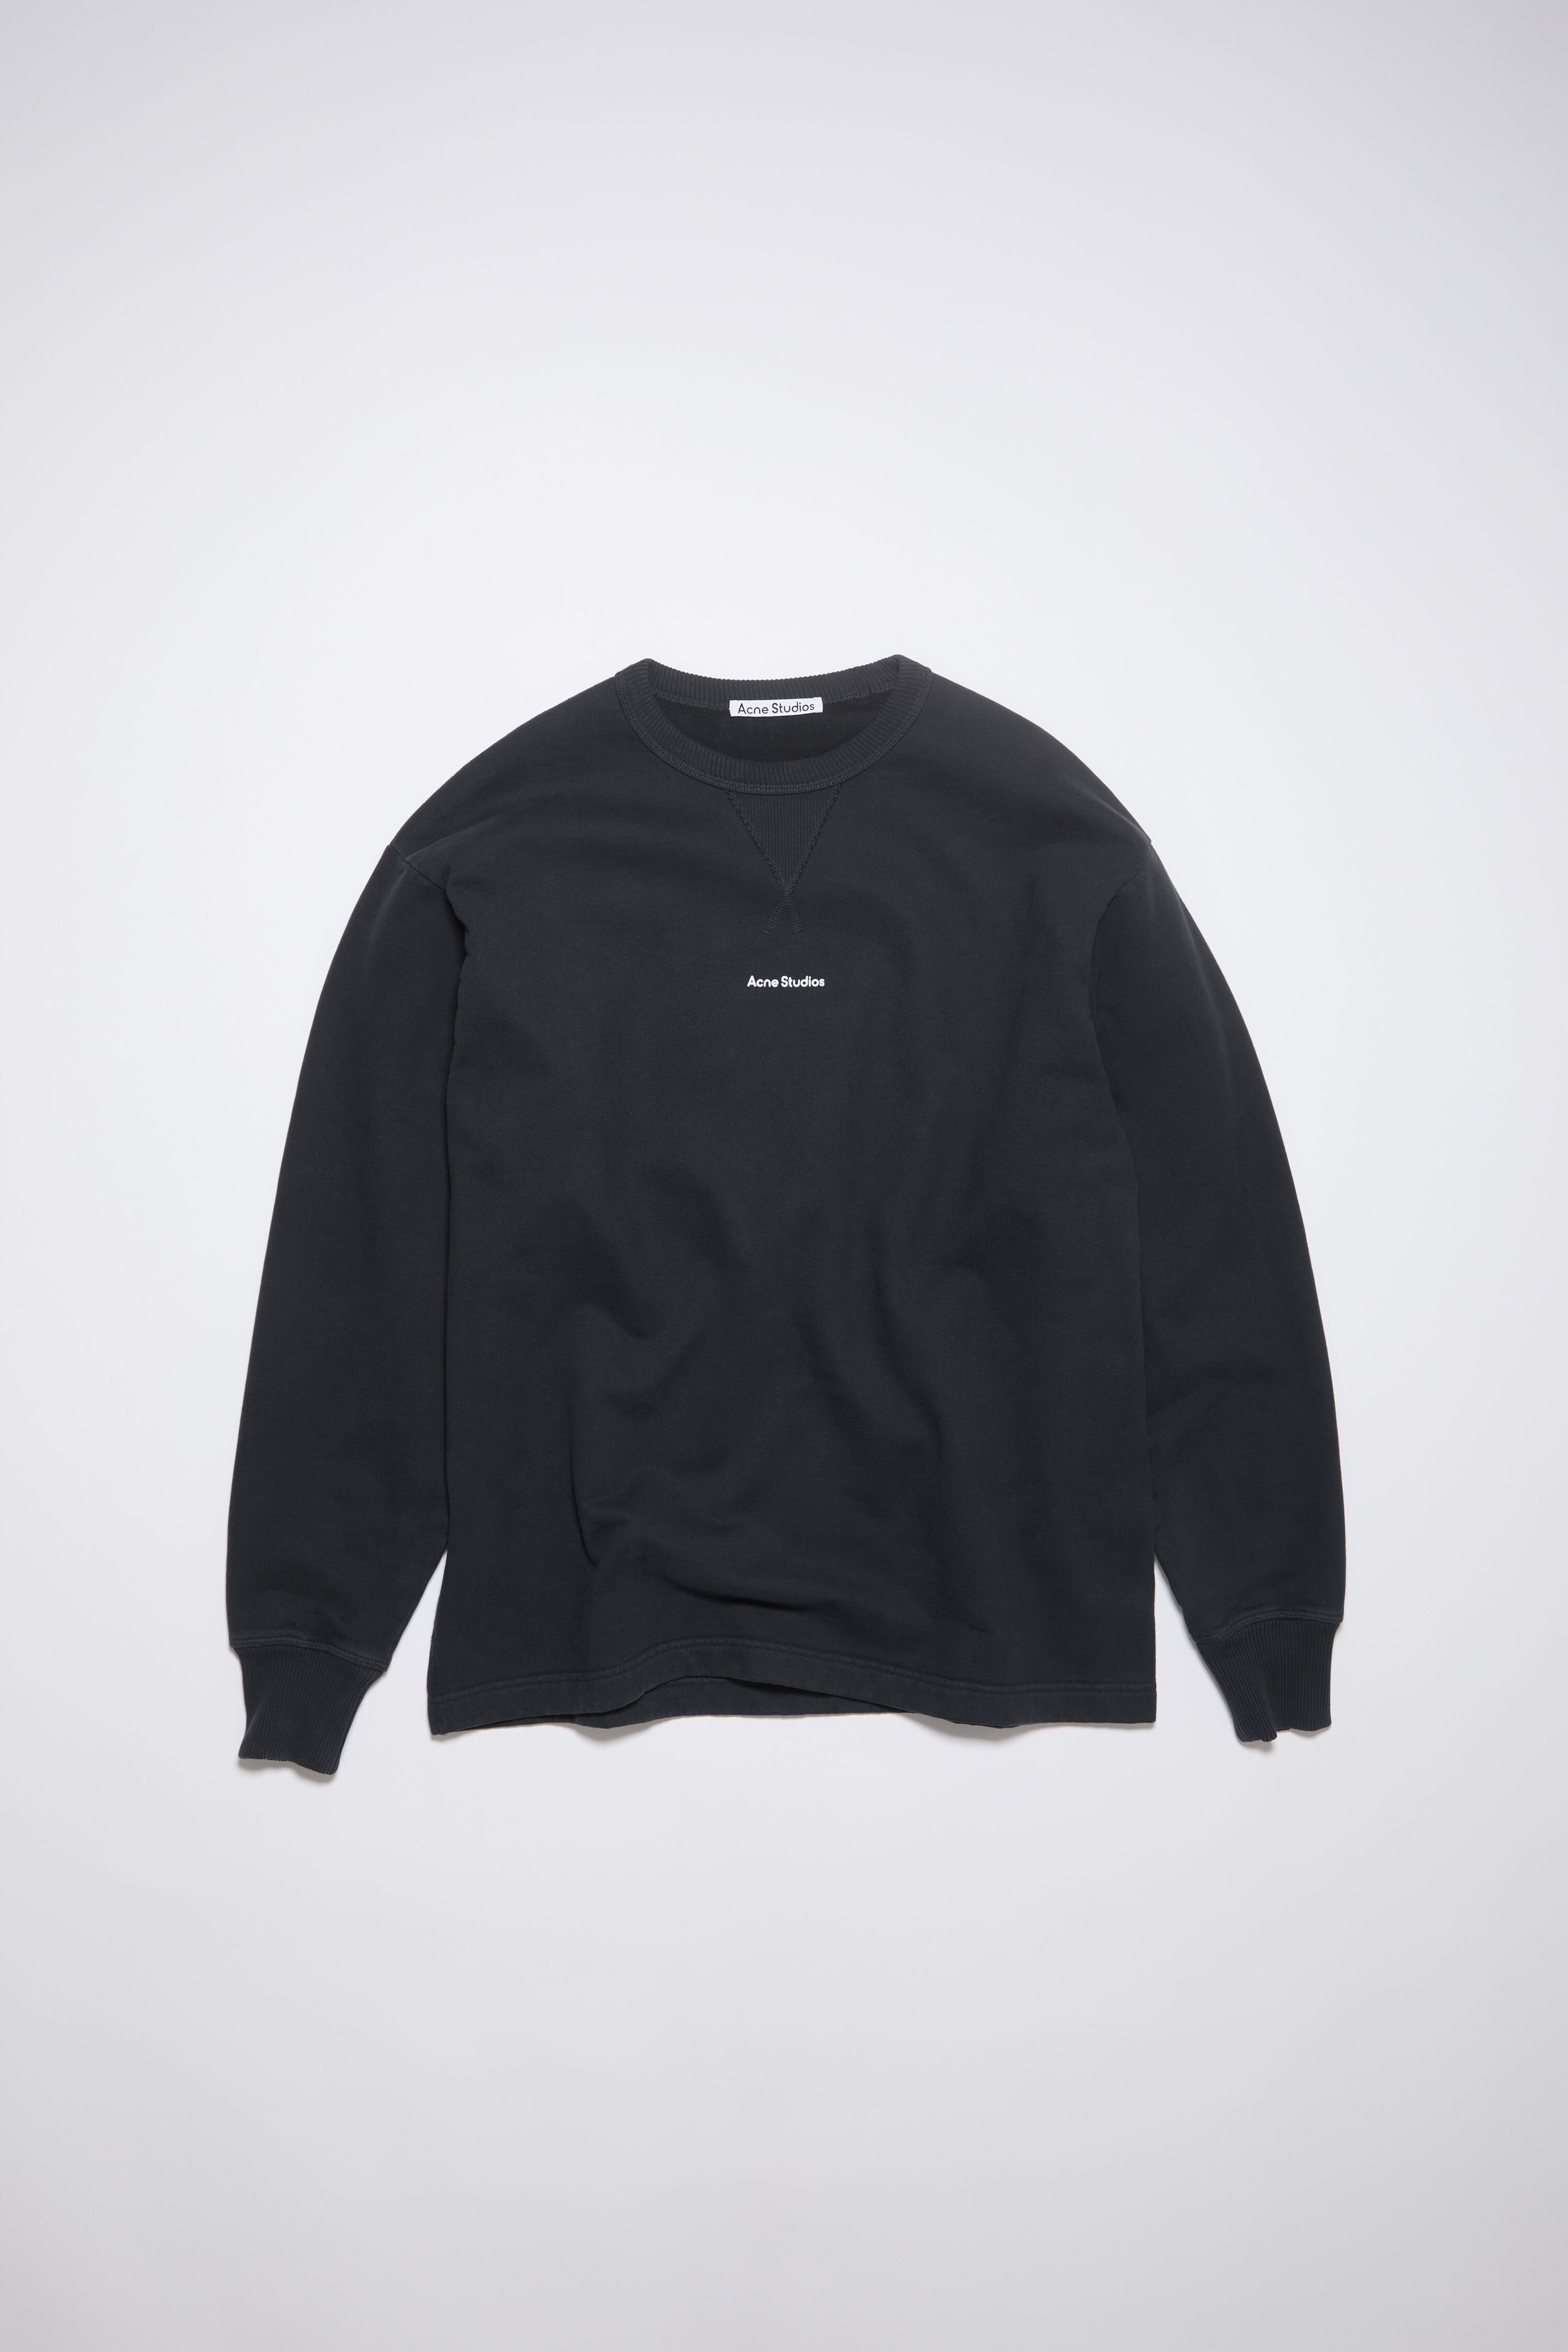 Acne Studios - Stamp logo sweater - Black